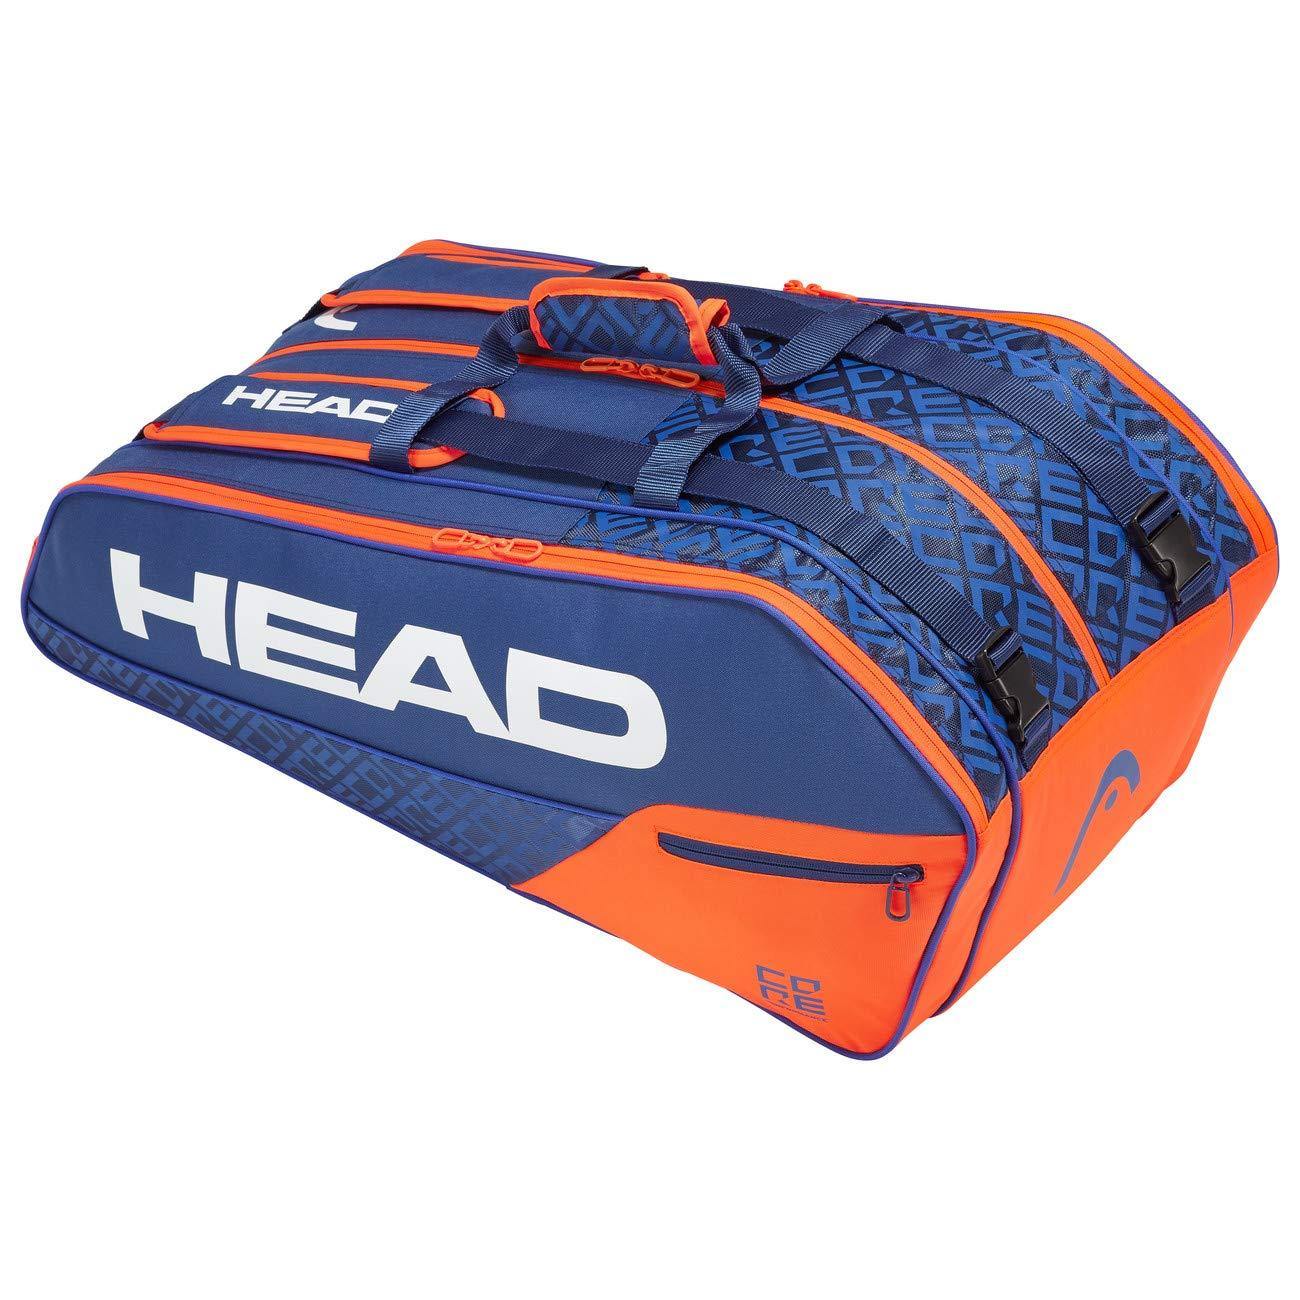 Head Core 9R Supercombi Kit Bag (Blue/Orange) - Best Price online Prokicksports.com